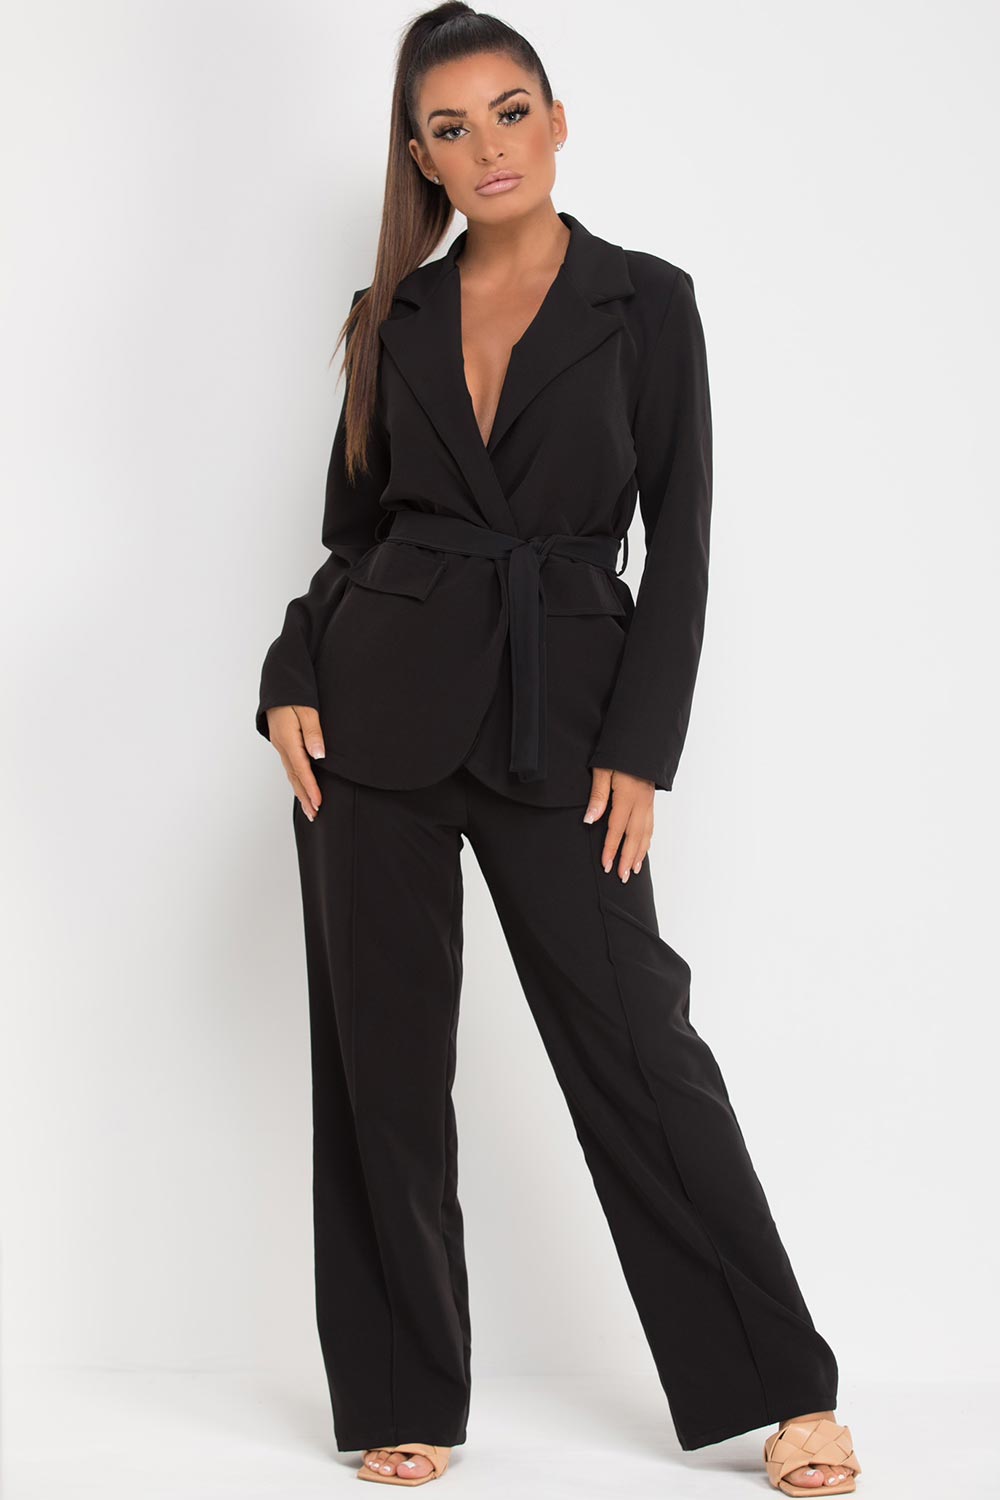 Black Bell Bottom Pants Suit Set With Blazer, Puffed Sleeve Blazer for Women,  Black Trouser Set for Women, Black Pantsuit Set Womens -  Canada